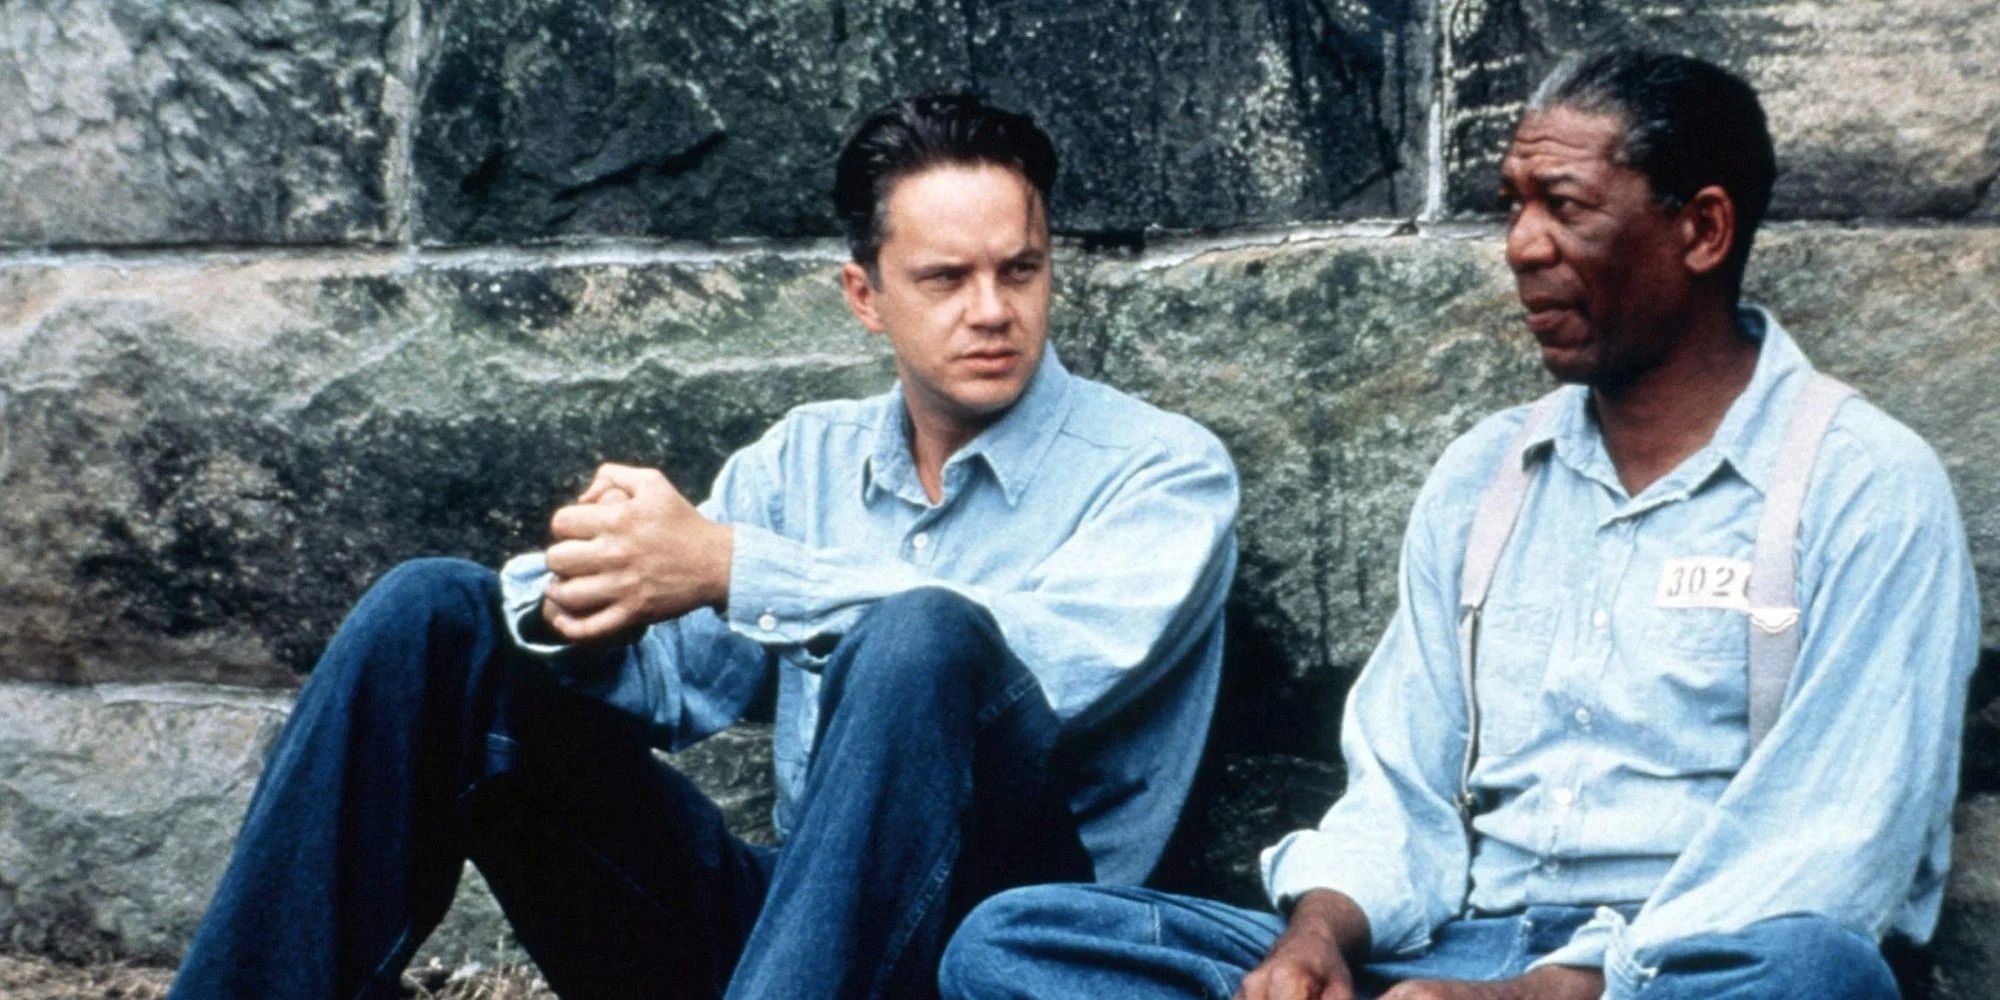 The Shawshank Redemption - Tim Robbins and Morgan Freeman